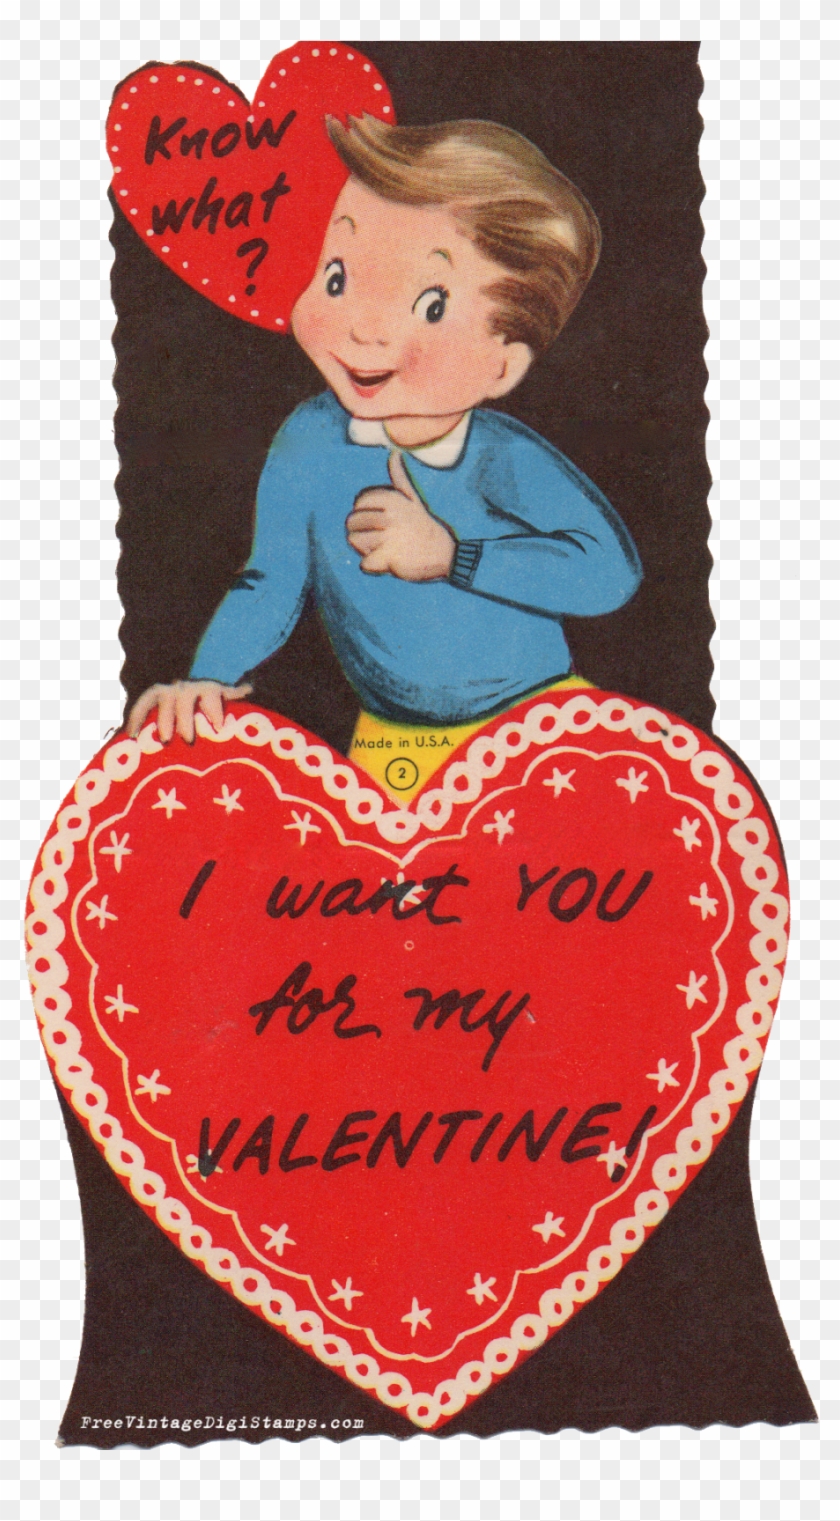 Free Vintage Printable Vintage Valentine Cards Right Click Heart Free Transparent Png Clipart Images Download